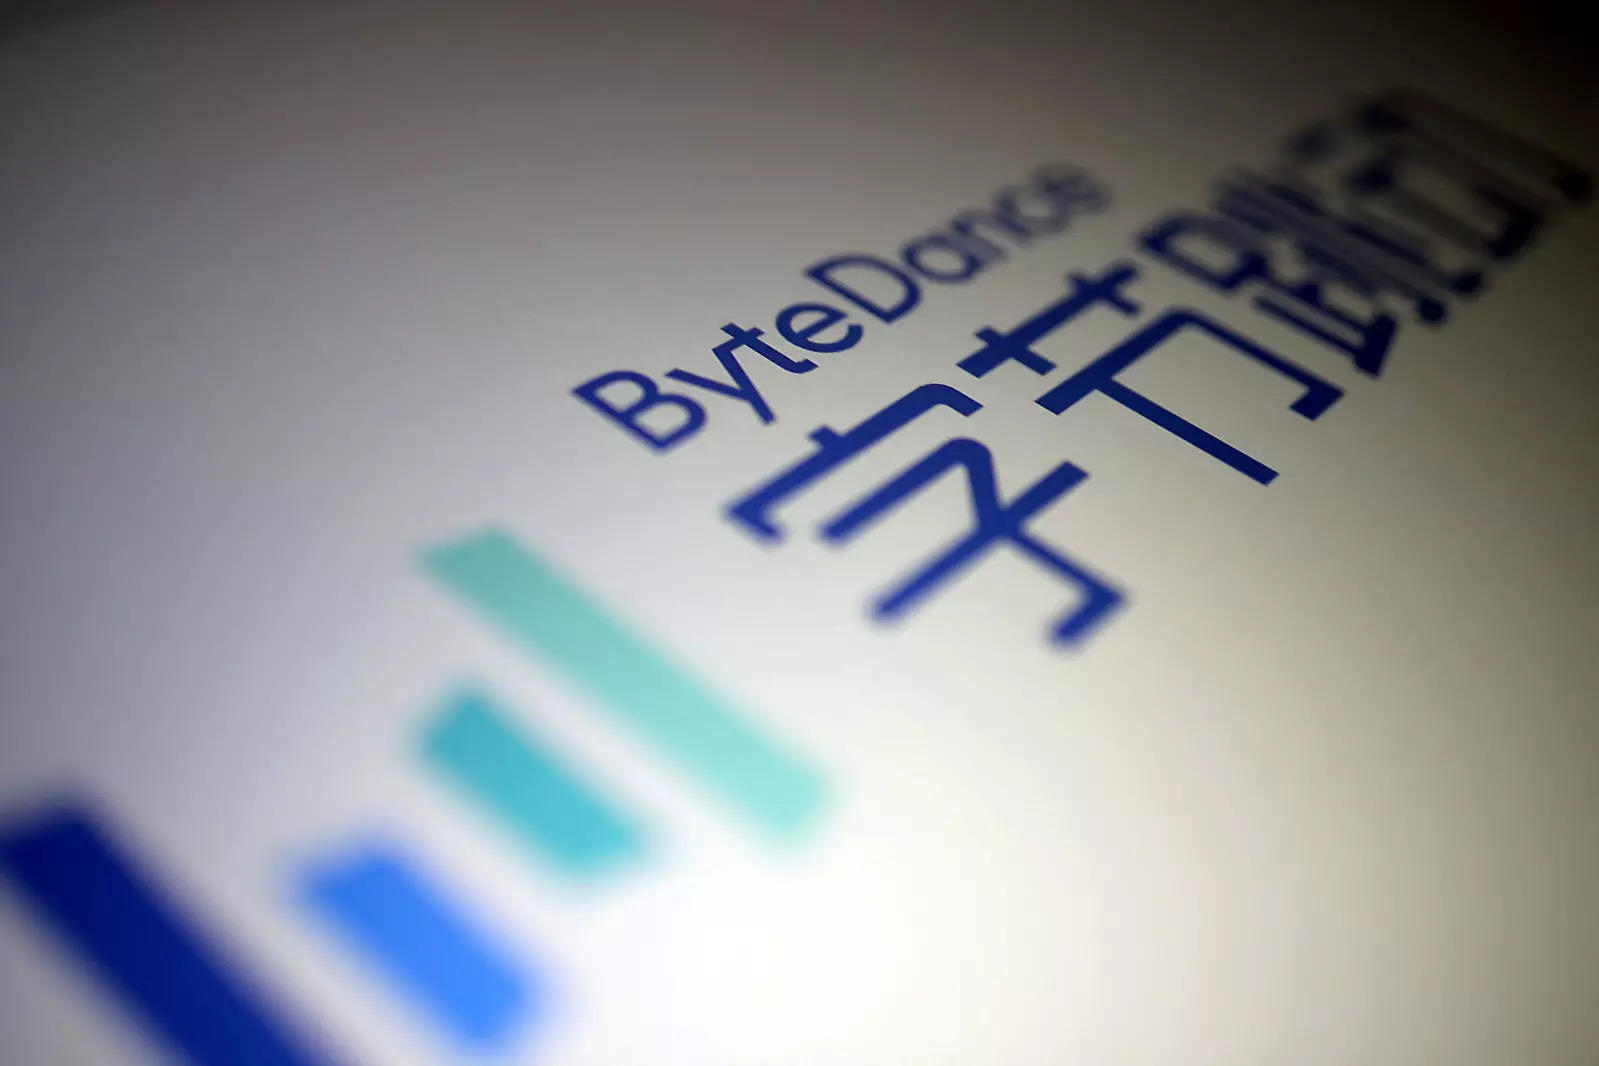 TikTok owner ByteDance's revenue growth slowed to 70% in 2021